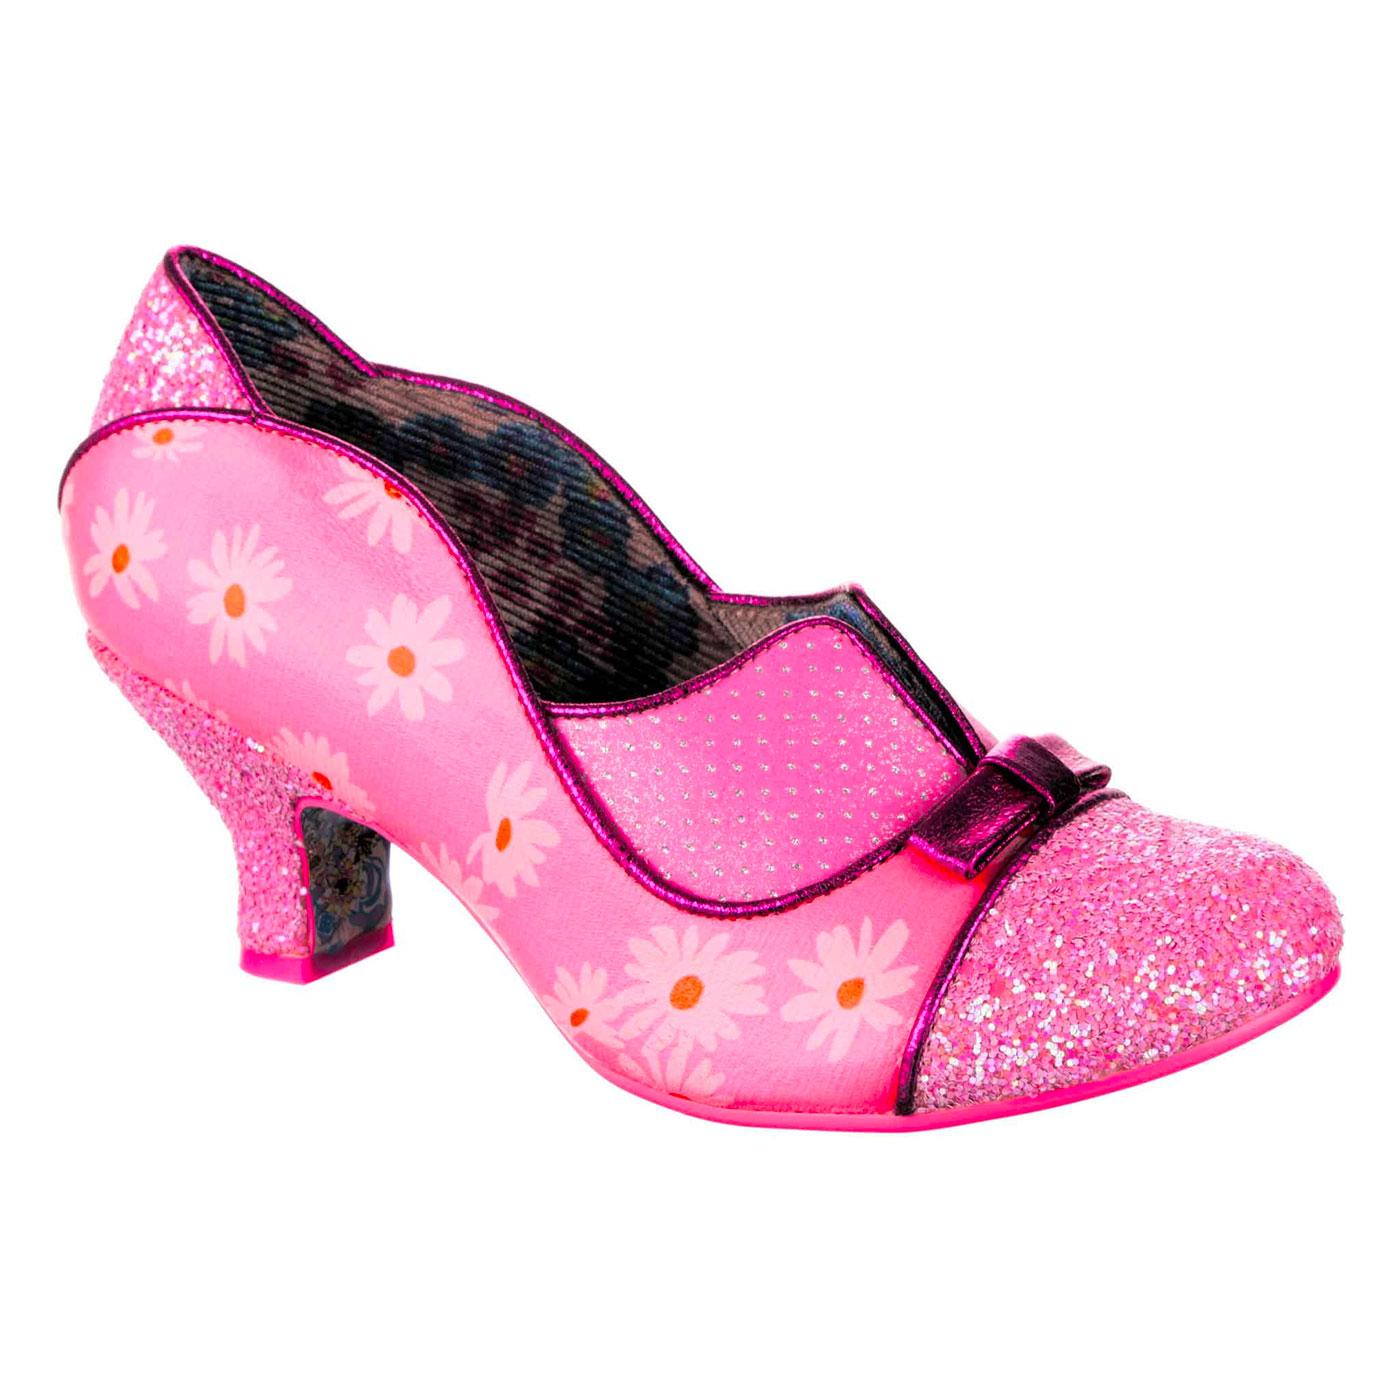 Irregular Choice Hold Up Mid Heel Shoes Pink